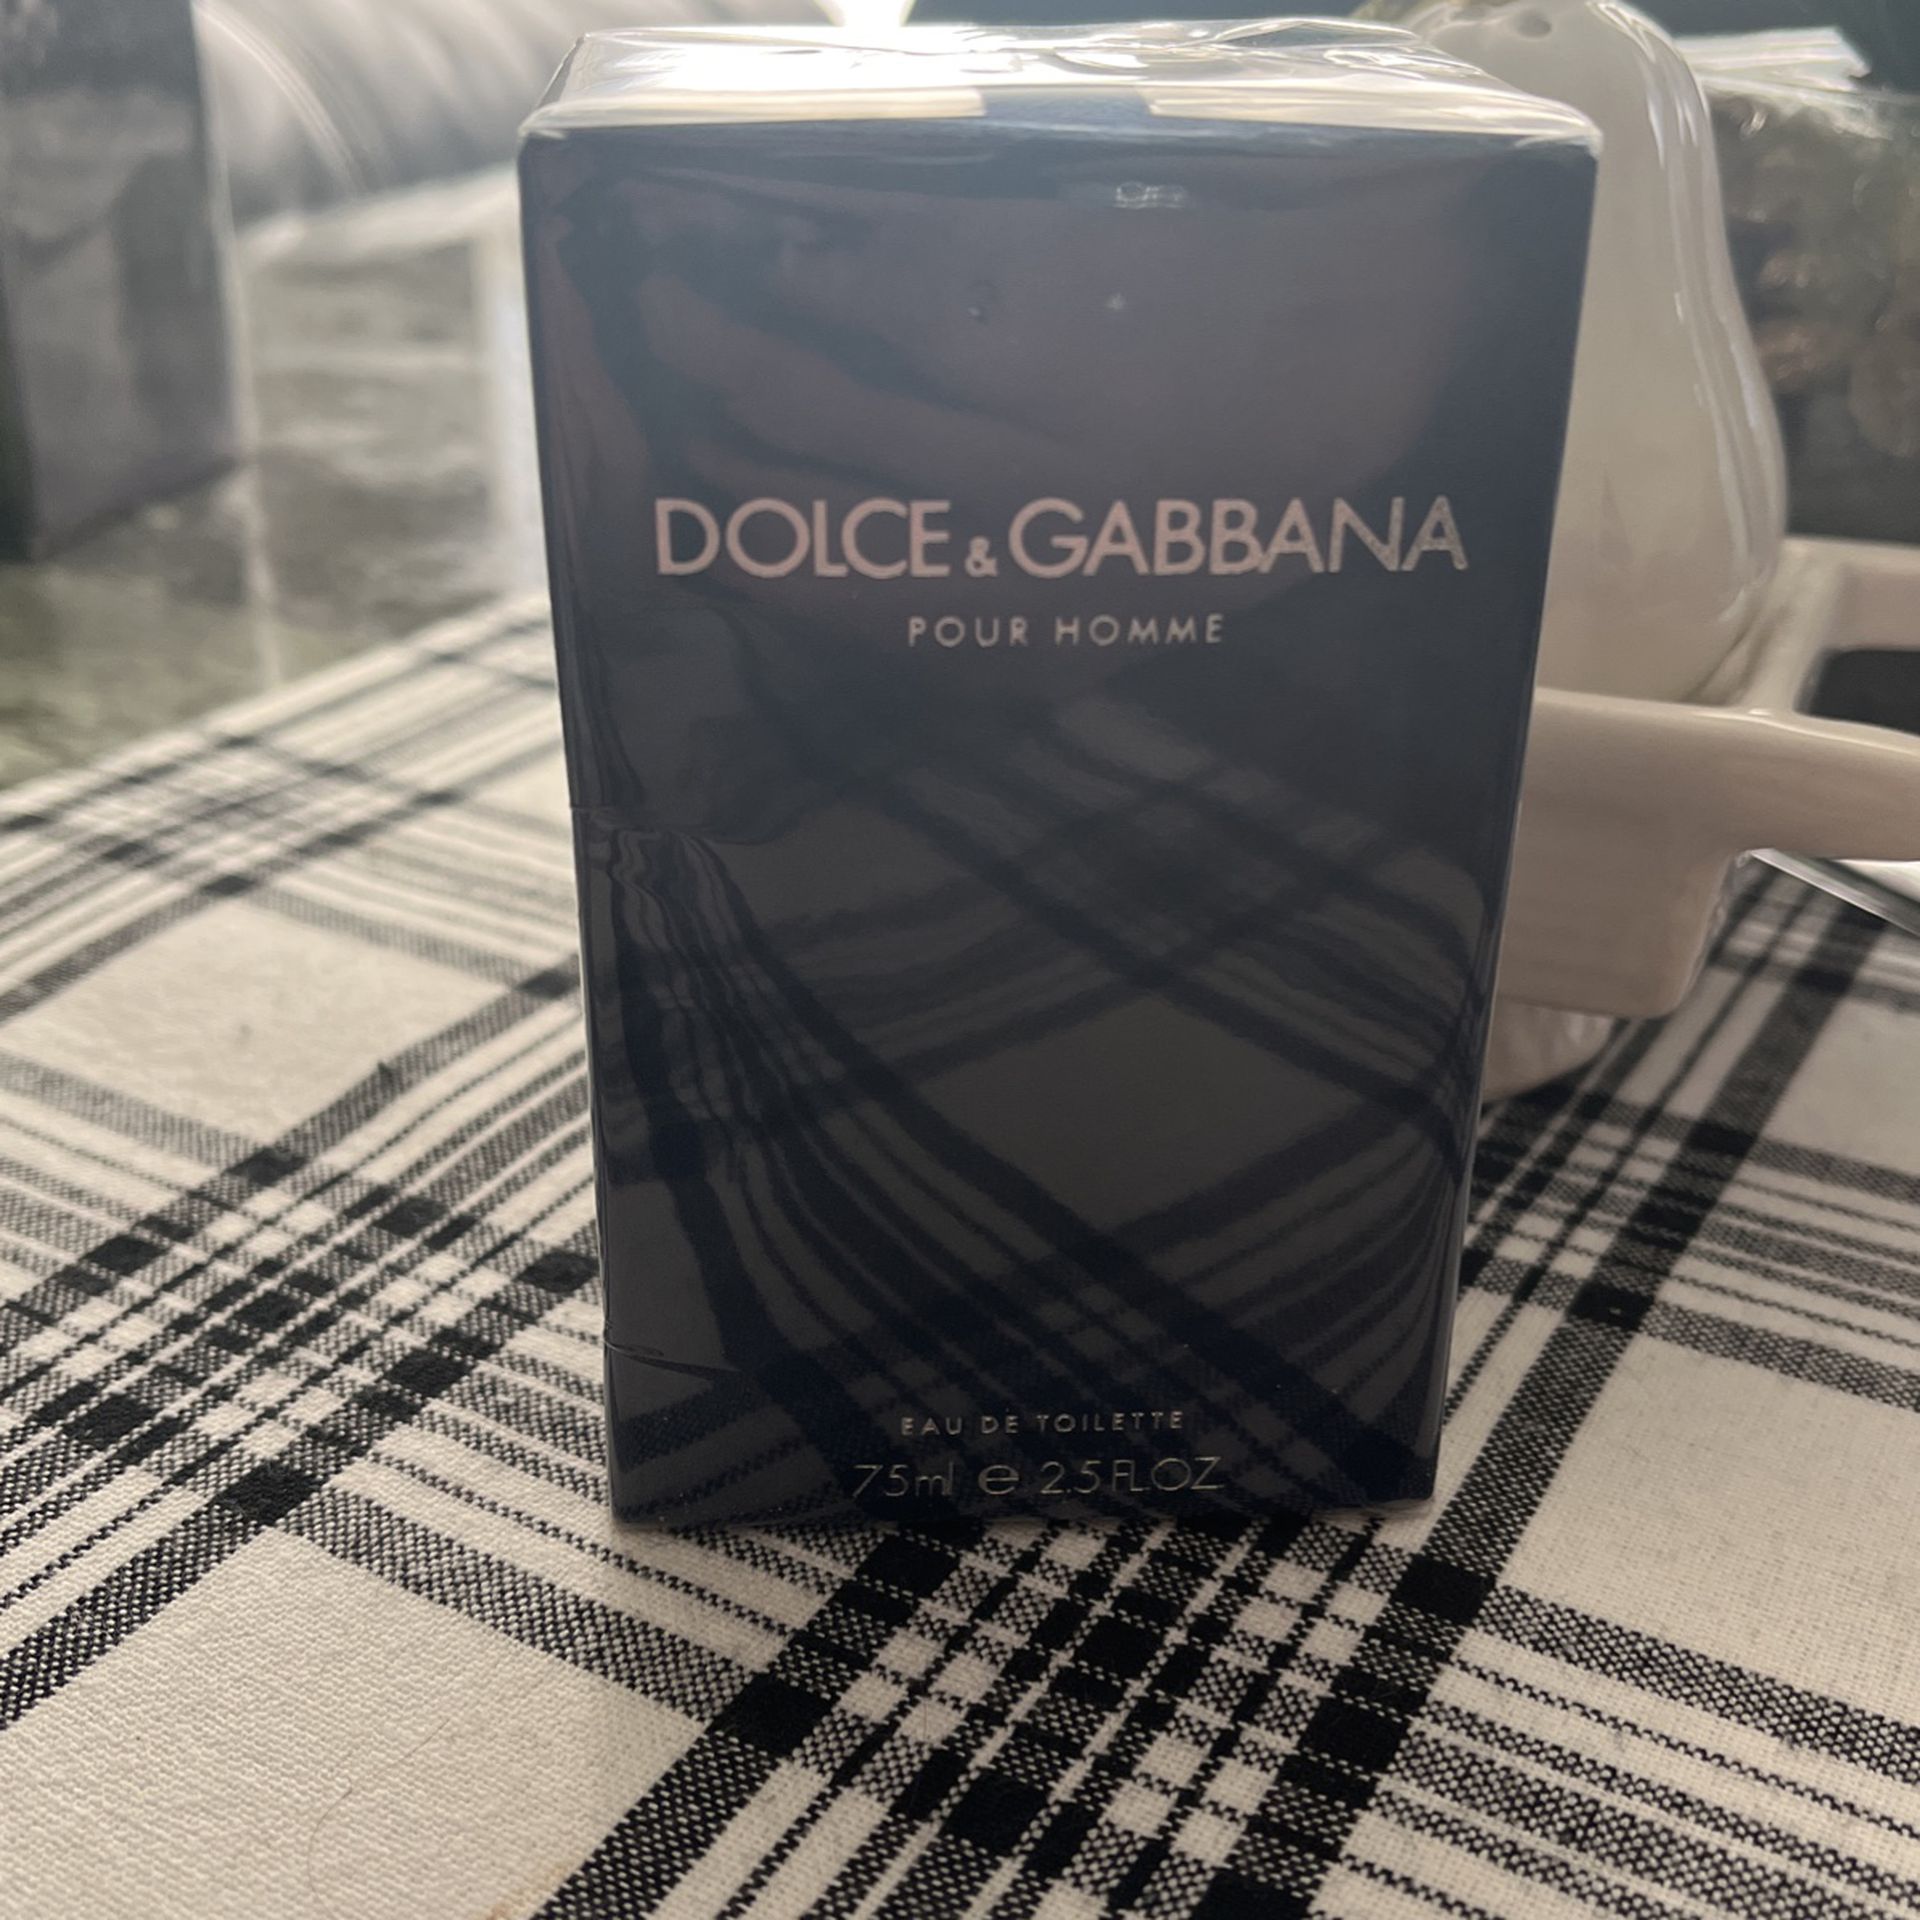 Dolce Gabbana Pour Home 